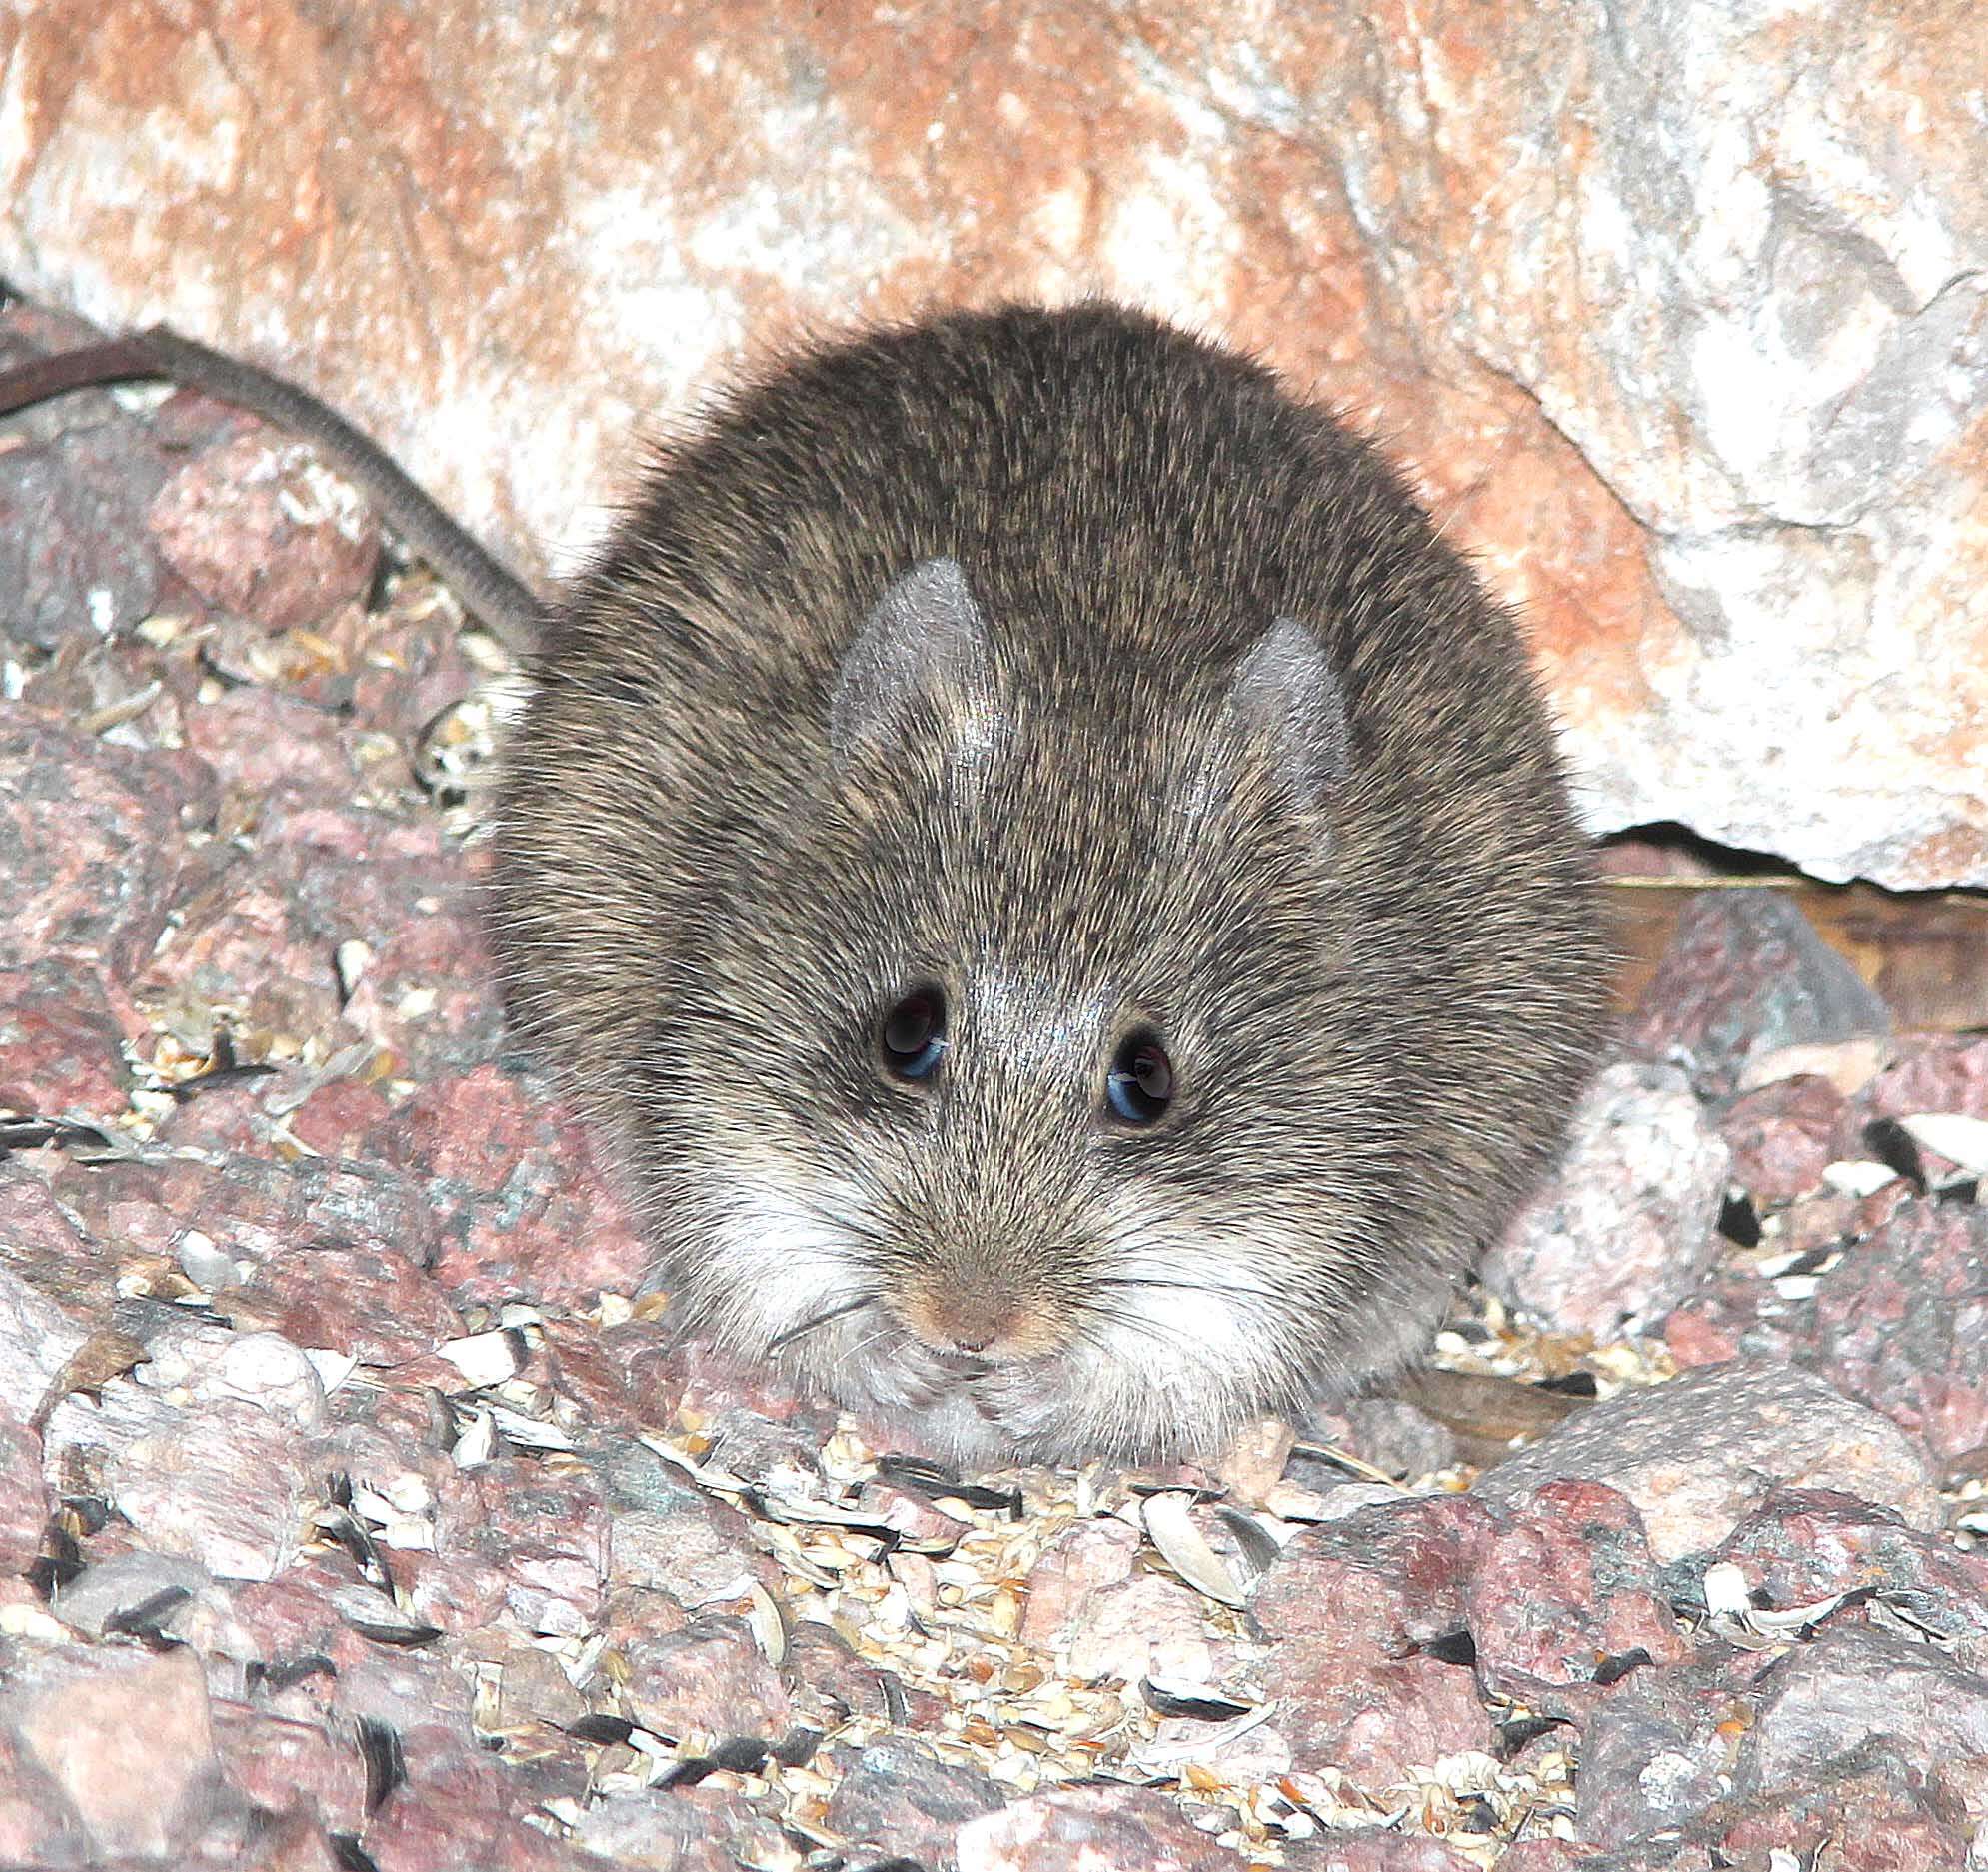 Image of Arizona cotton rat